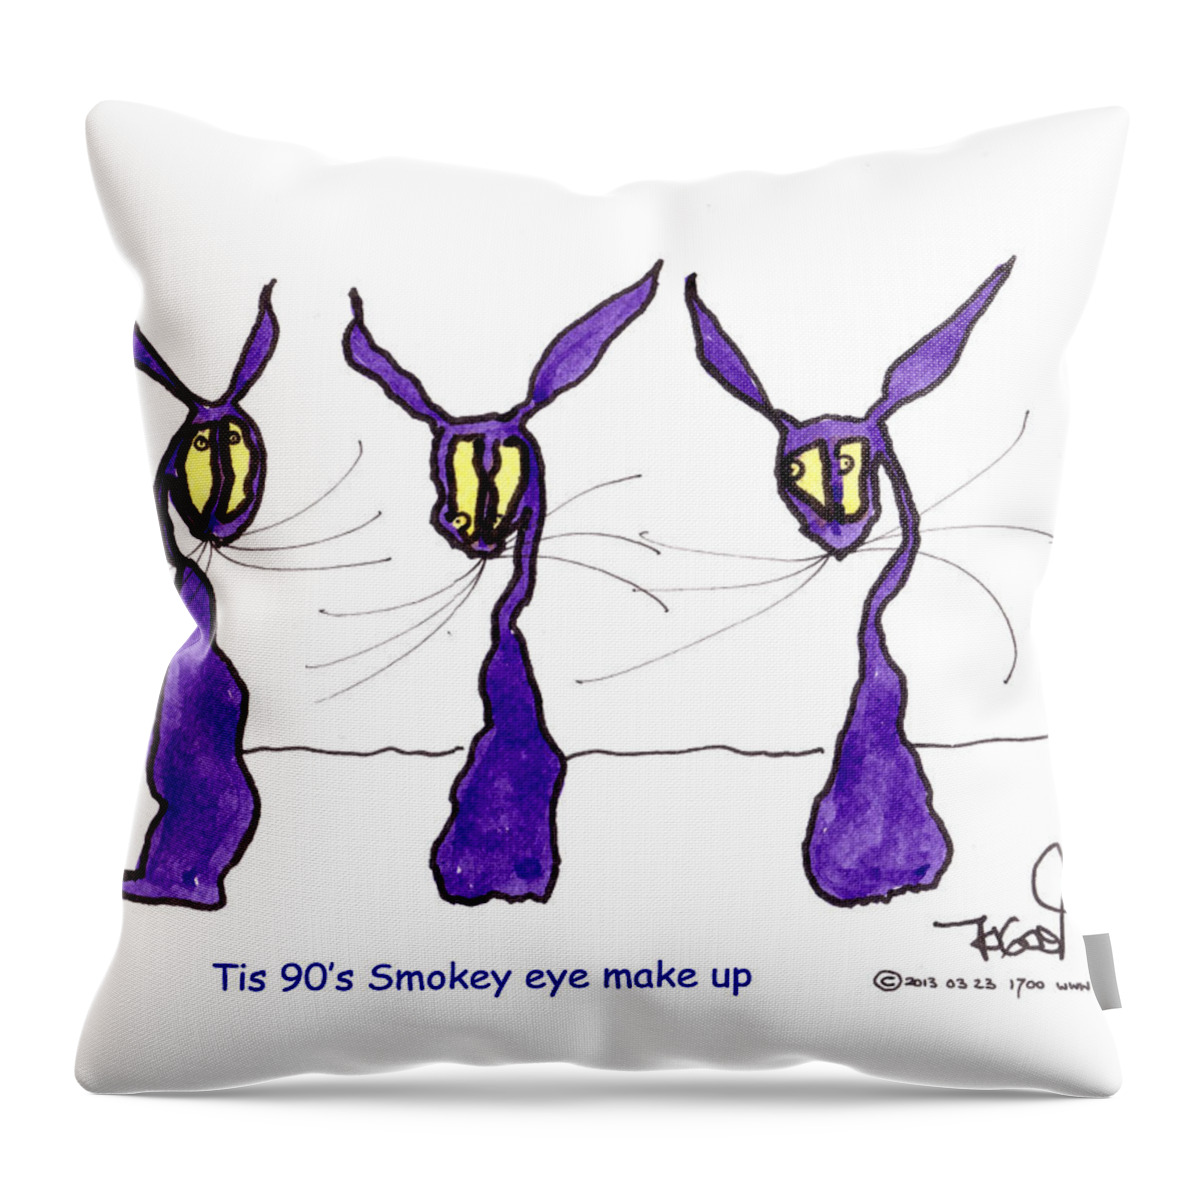 Mascara Throw Pillow featuring the painting Tis 90's Smokey eye make up by Peadar Sheerin